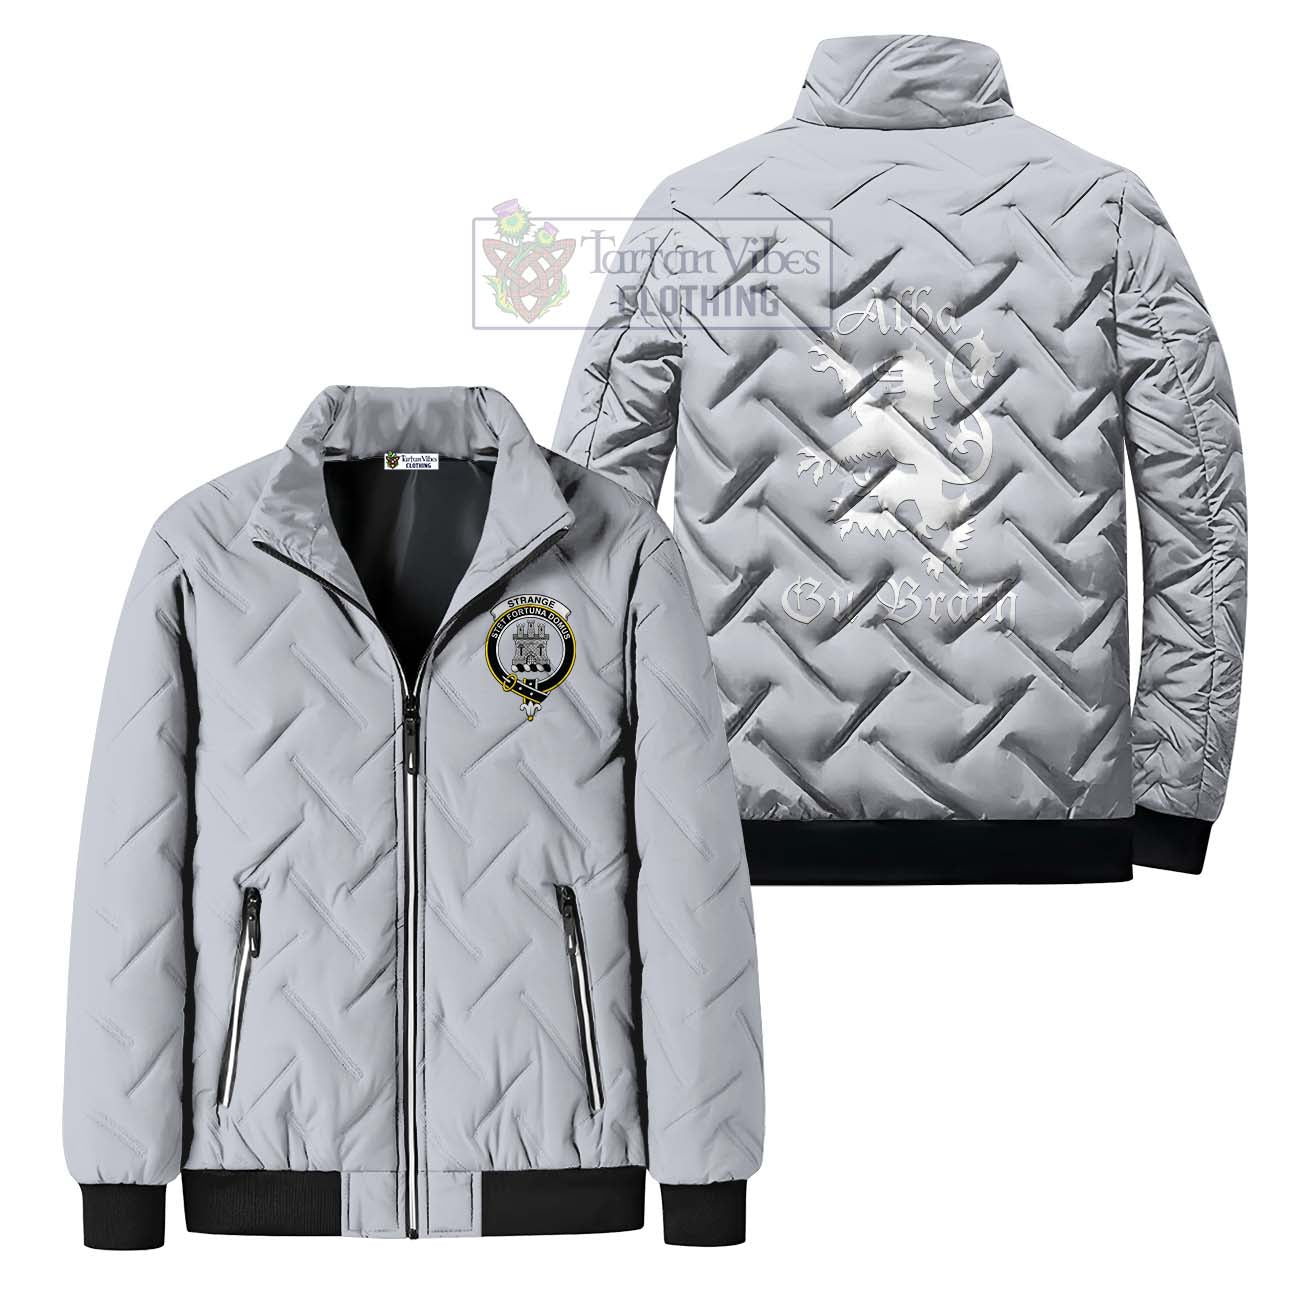 Tartan Vibes Clothing Strange Family Crest Padded Cotton Jacket Lion Rampant Alba Gu Brath Style